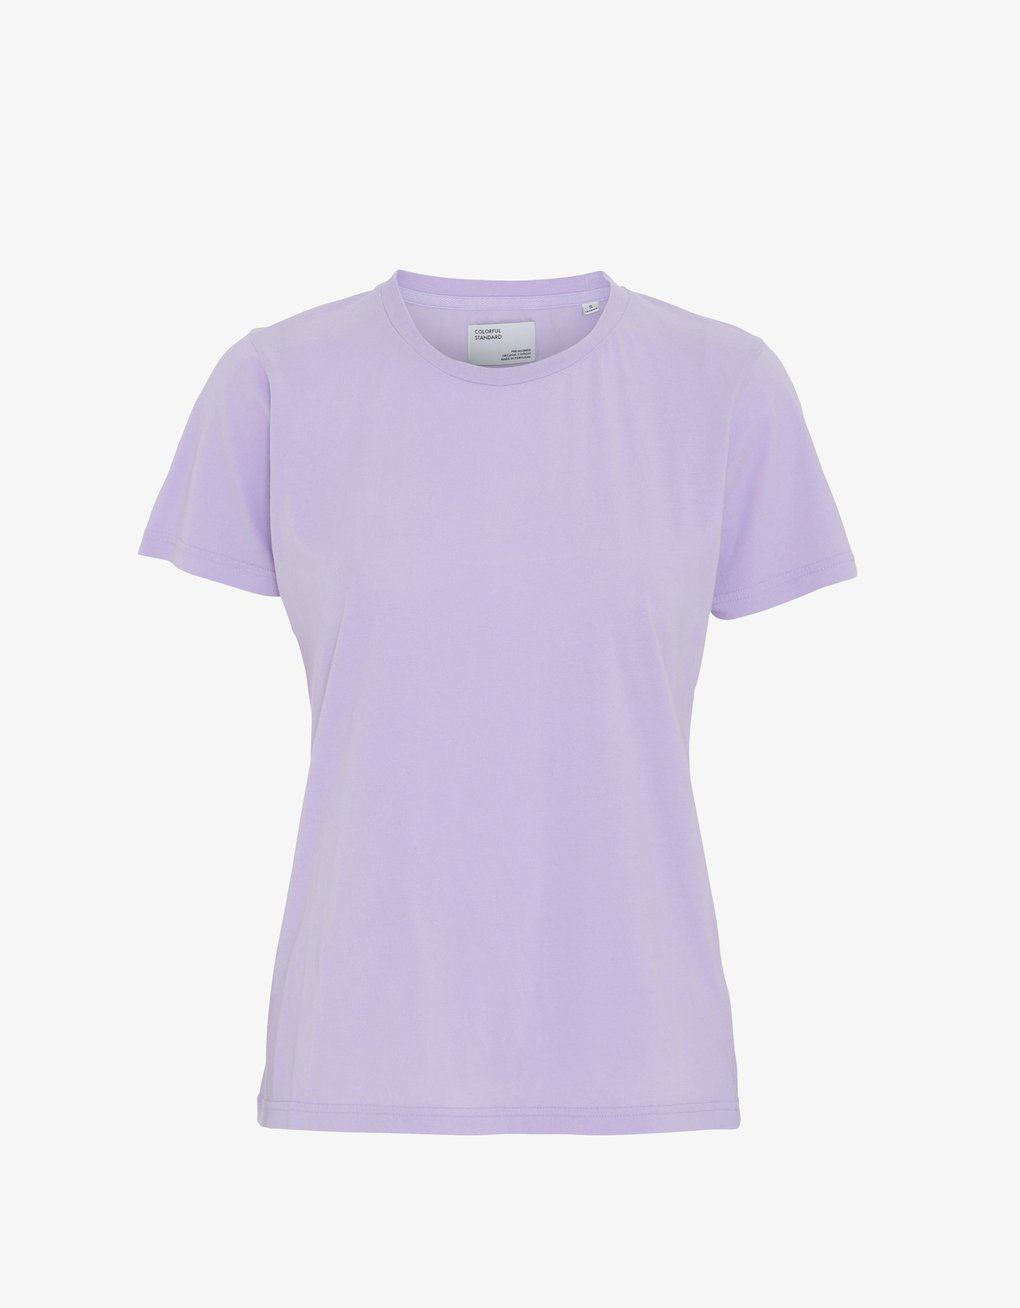 Camiseta Ligera de Mujer Orgánica Lavanda - ECRU